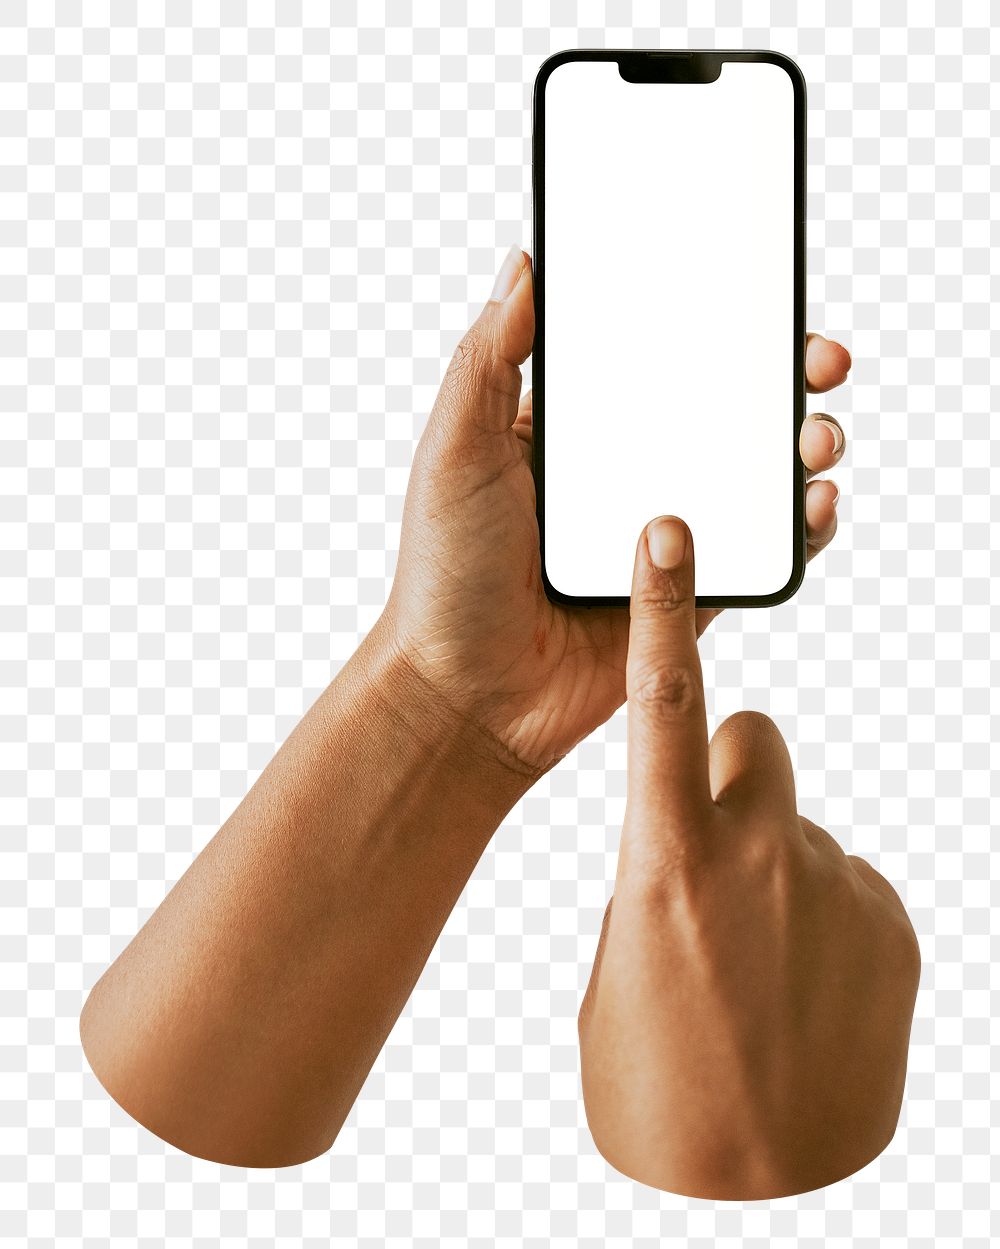 PNG Hand holding smartphone transparent background